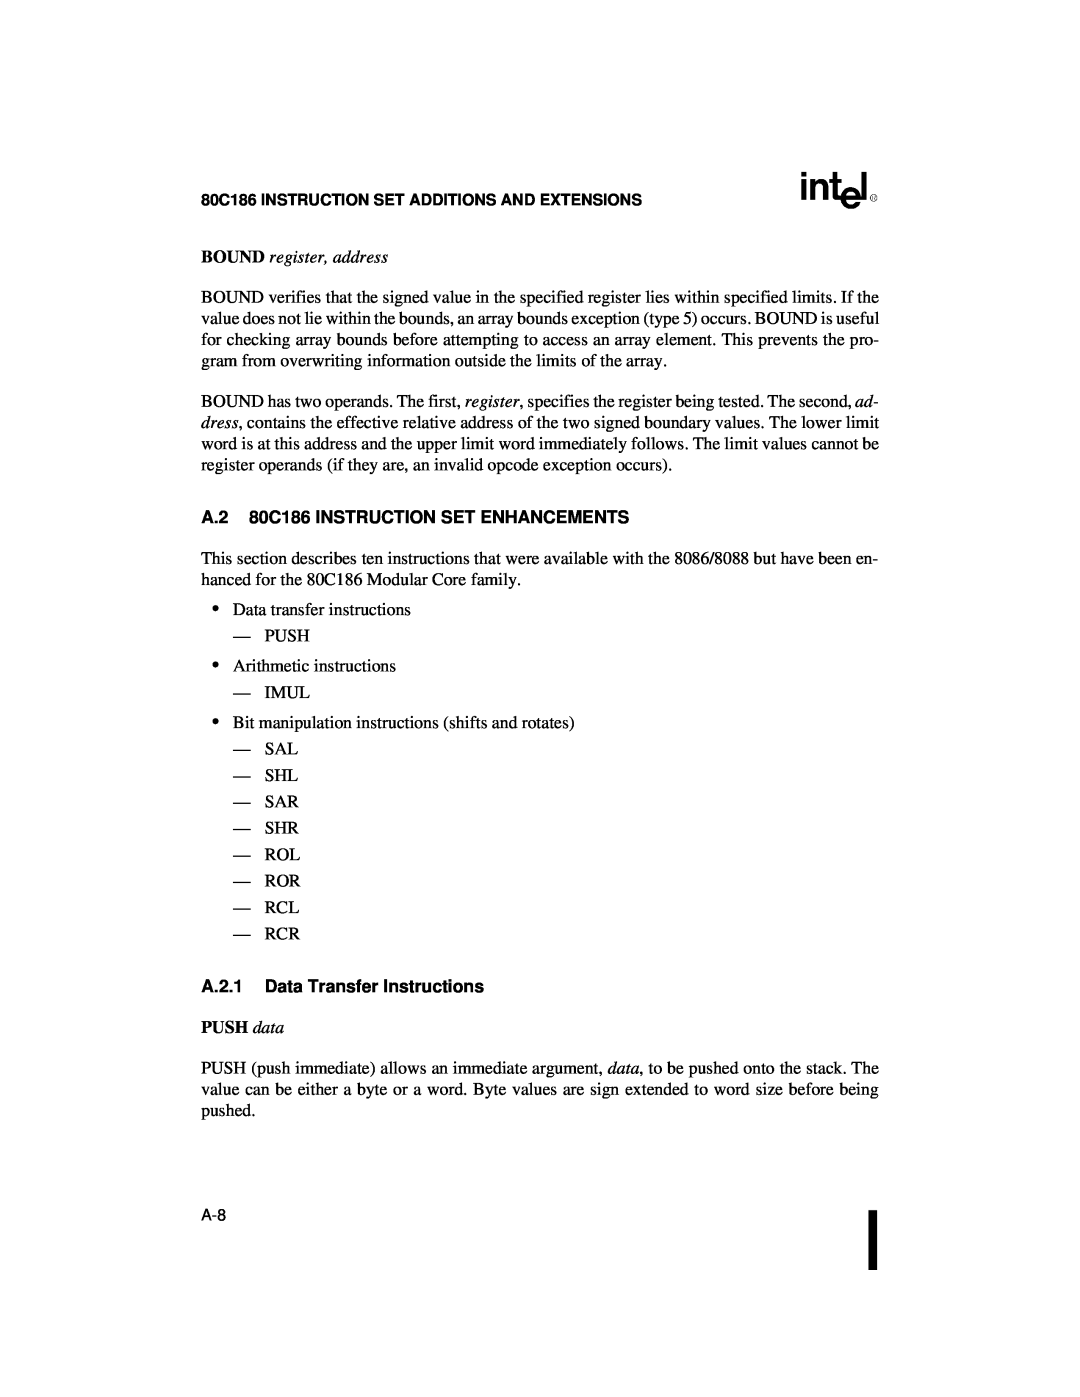 Intel 80C186XL BOUND register, address, A.2 80C186 INSTRUCTION SET ENHANCEMENTS, A.2.1 Data Transfer Instructions 